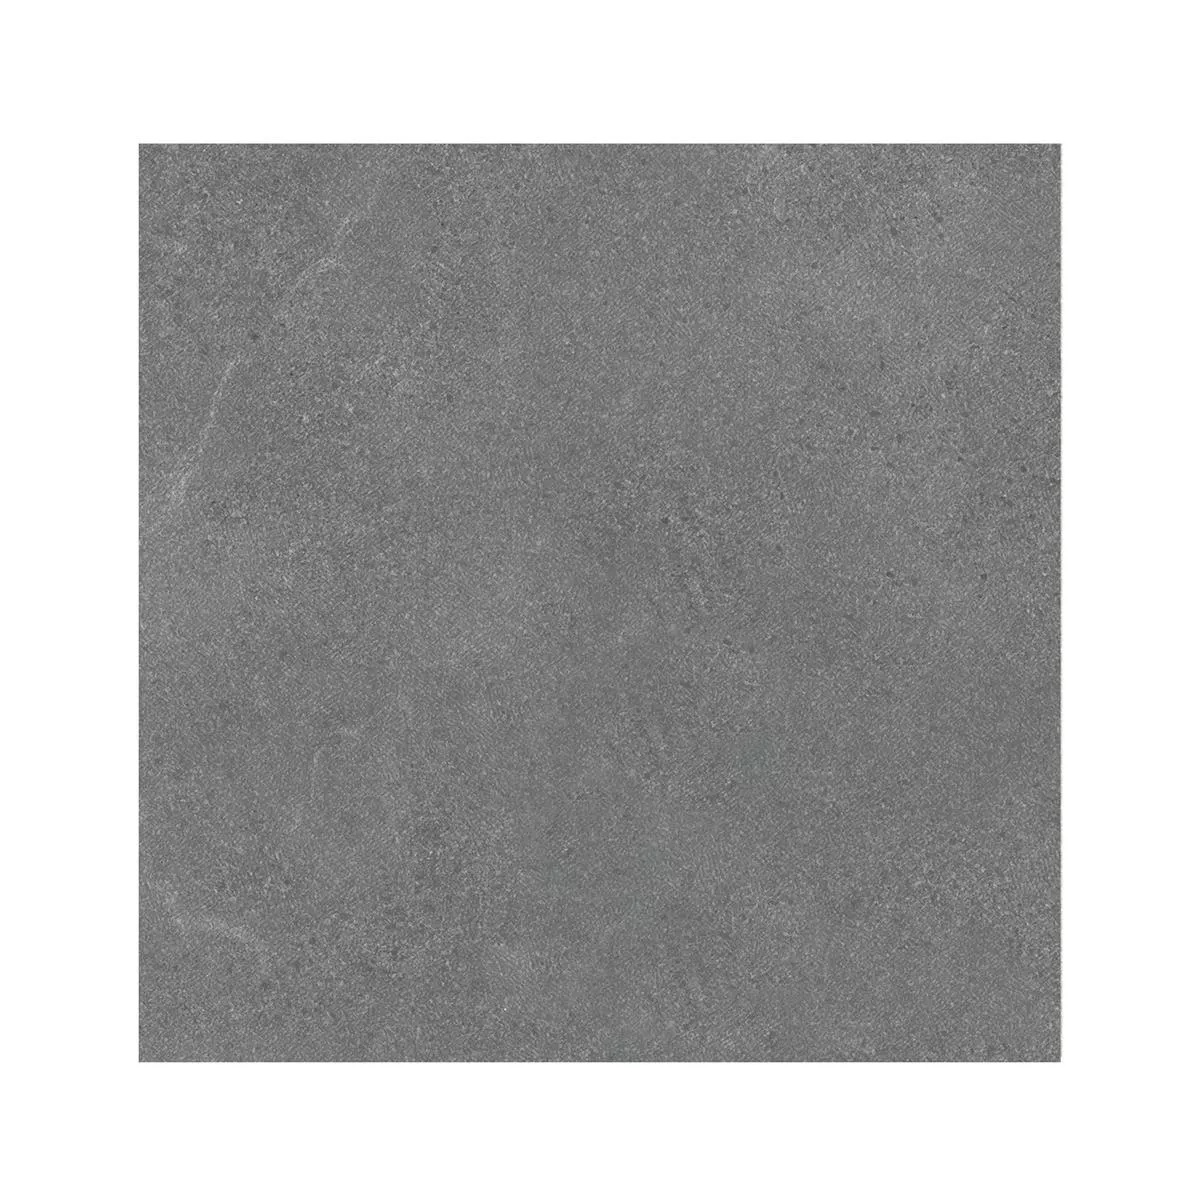 Floor Tiles Galilea Unglazed R10B Anthracite 30x30cm